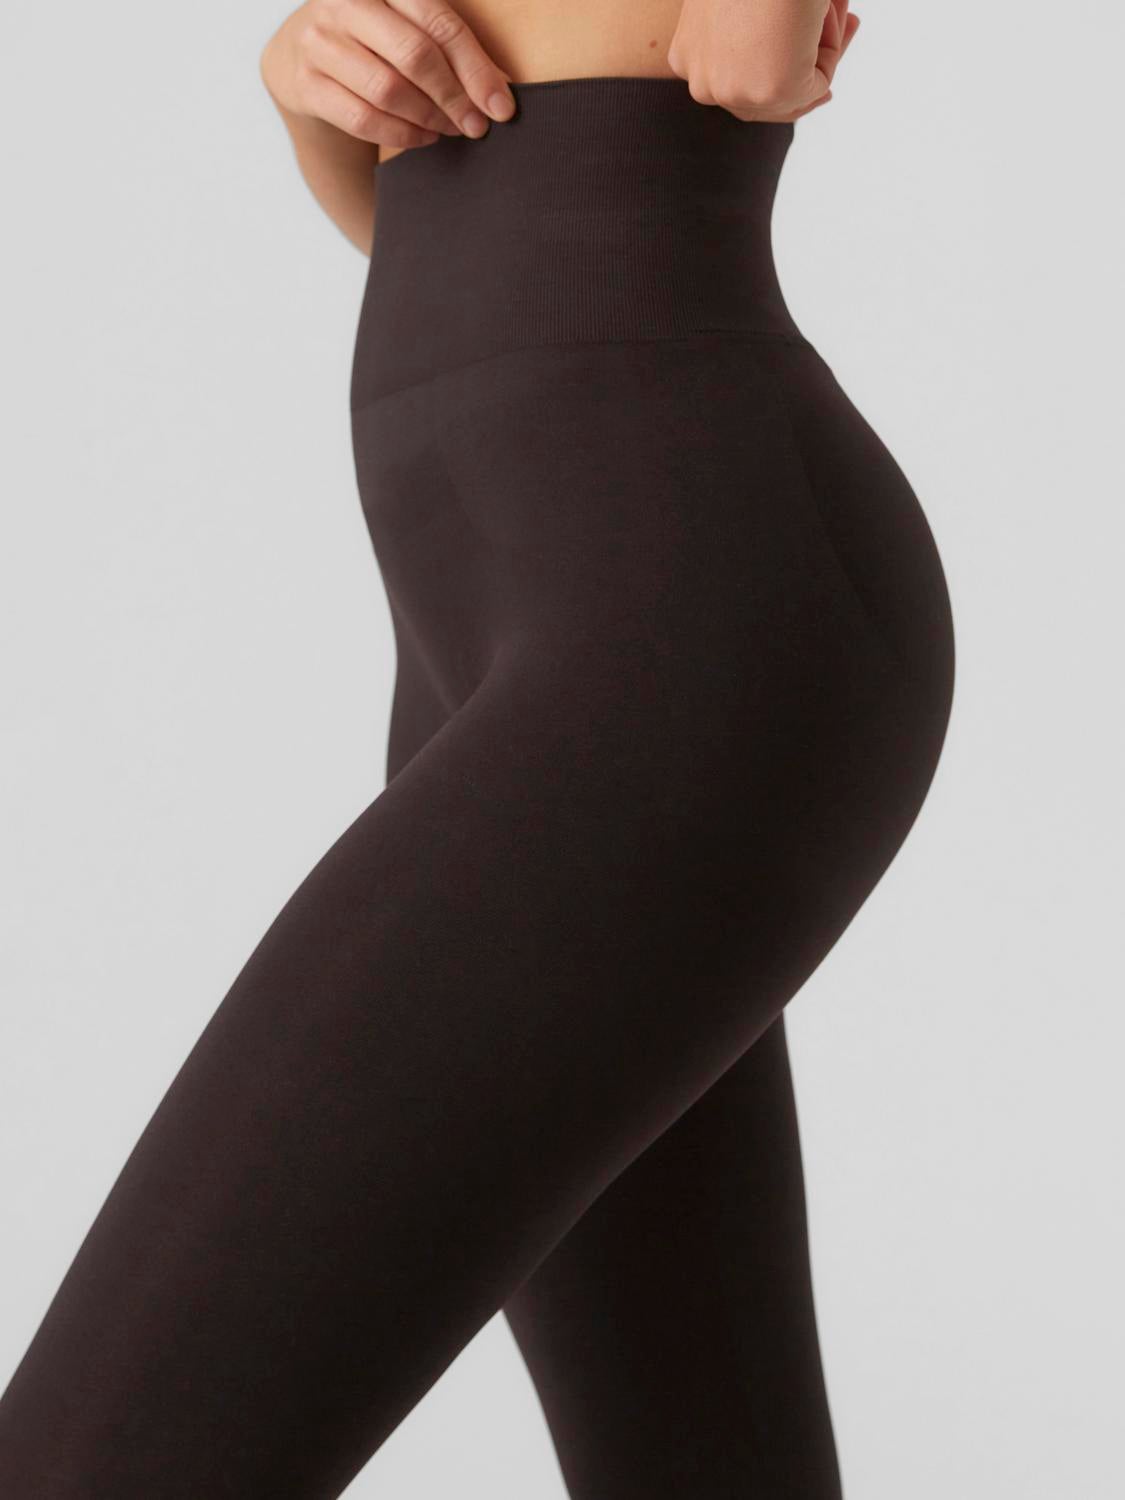 Bellefit High Waisted Postpartum Leggings Tummy Control Body Shaper Pants |  eBay